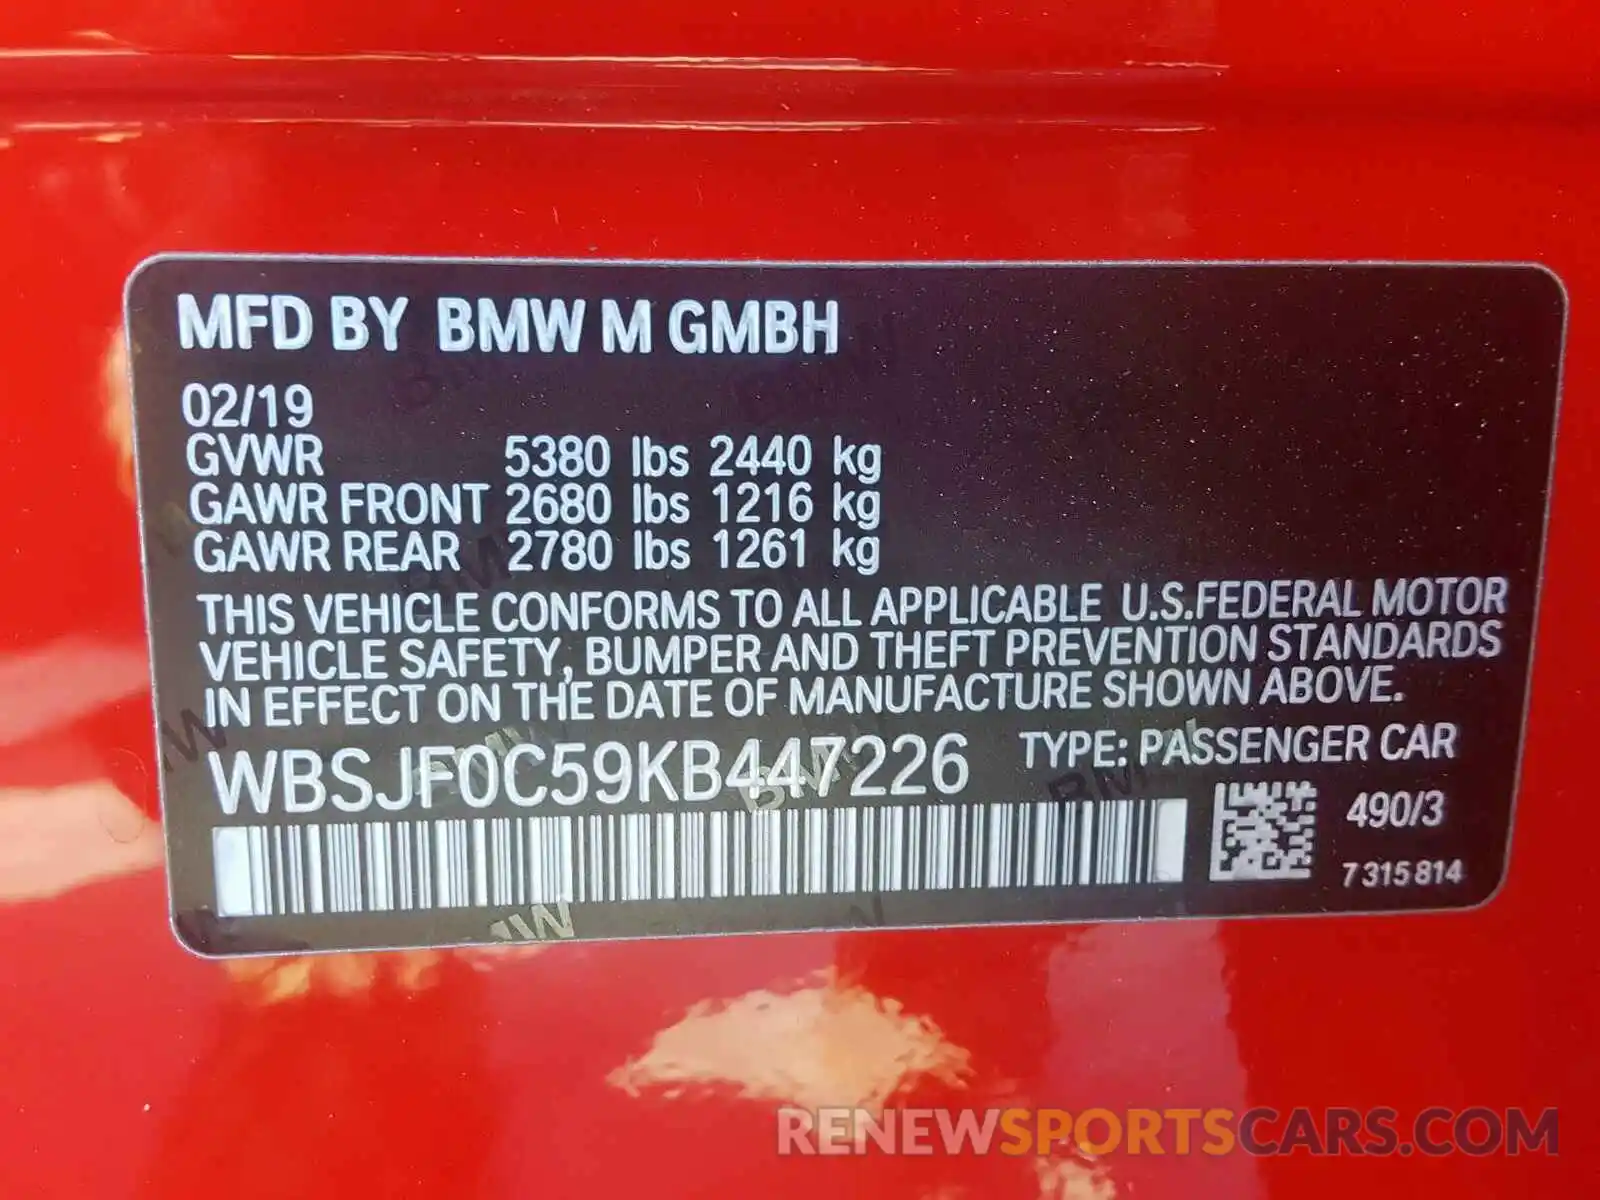 10 Photograph of a damaged car WBSJF0C59KB447226 BMW M5 2019